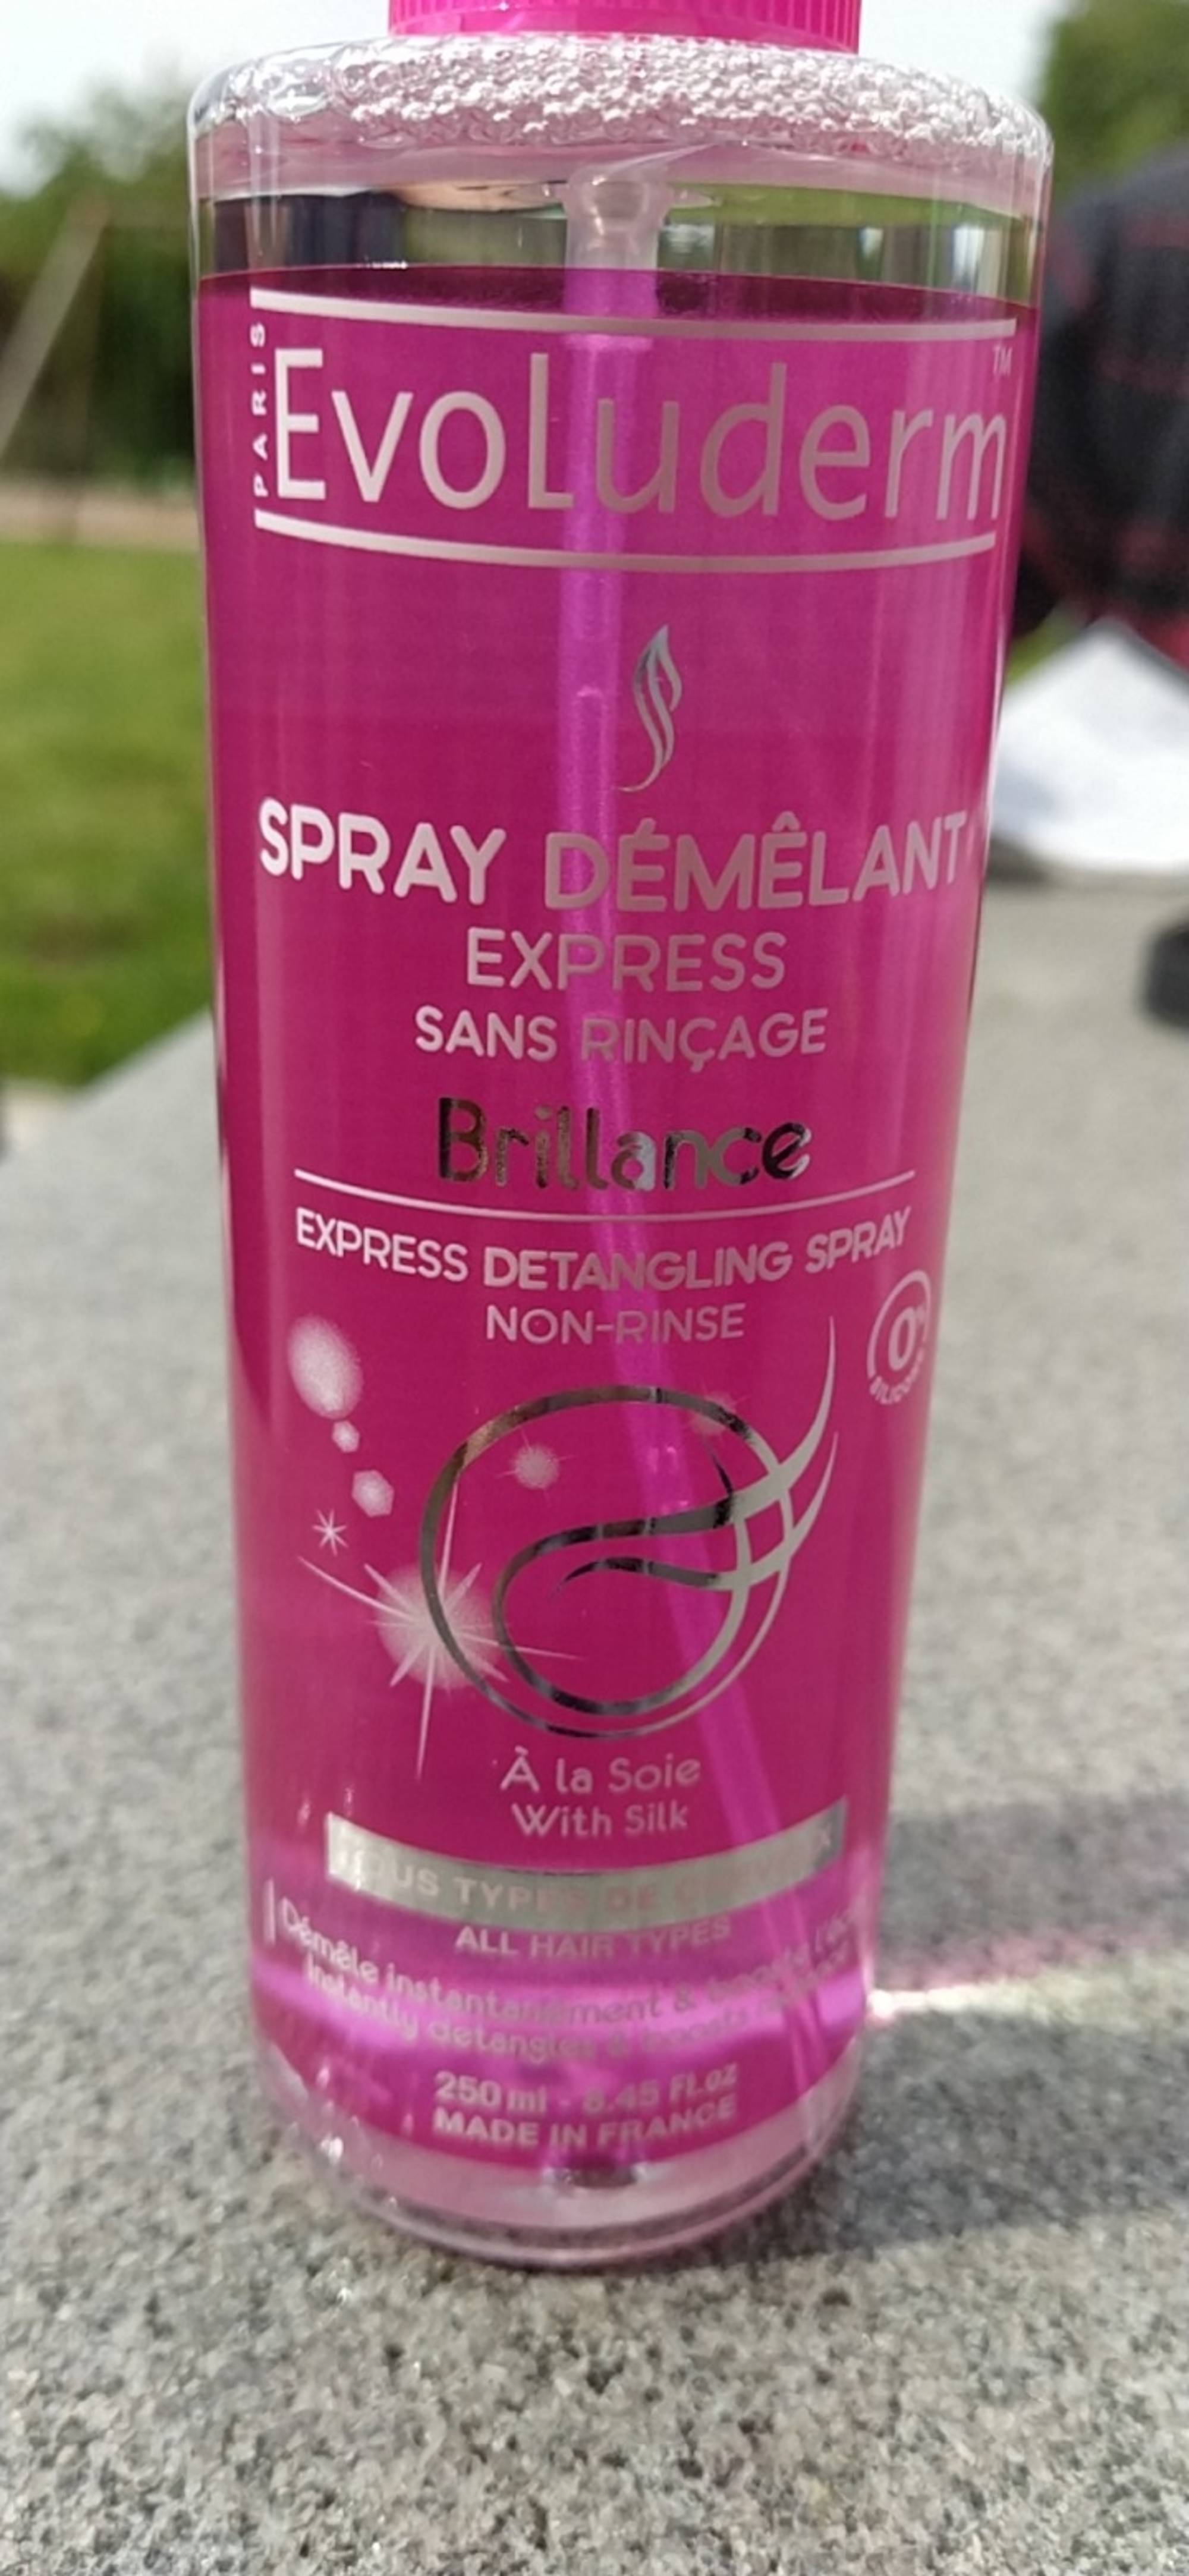 EVOLUDERM - Brillance - Spray démêlant express